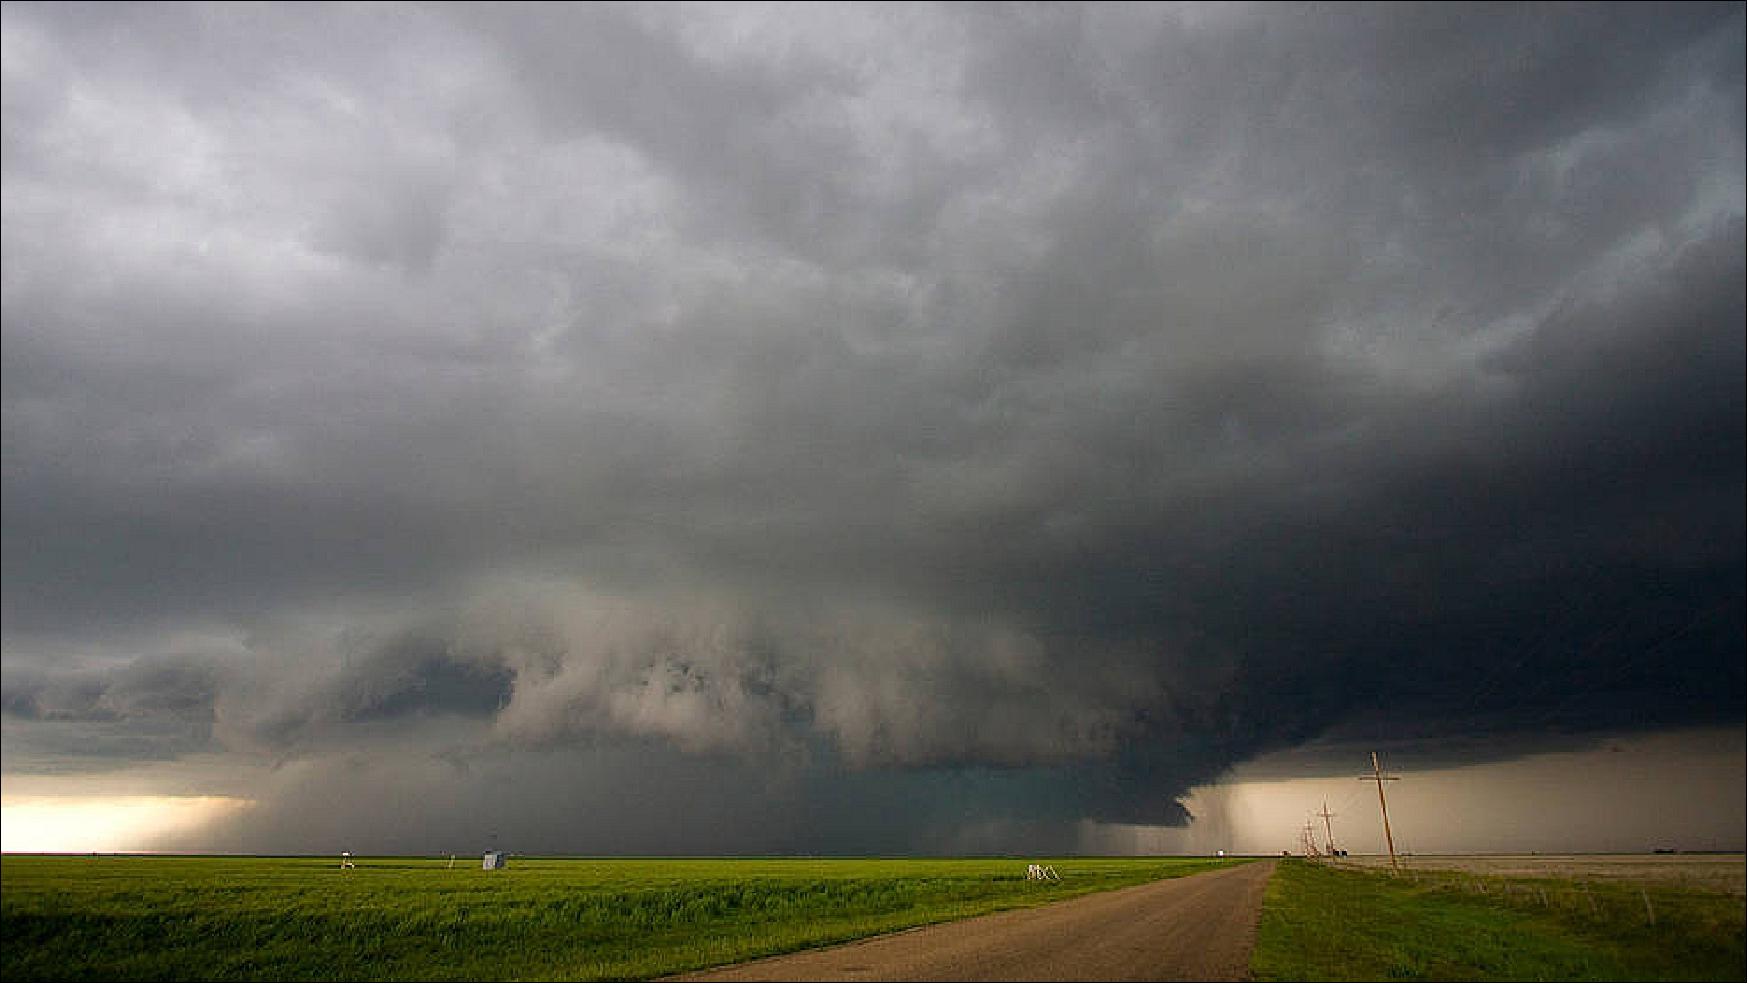 Figure 42: An "anvil" storm cloud in the Midwestern U.S. (image credit: UCAR)